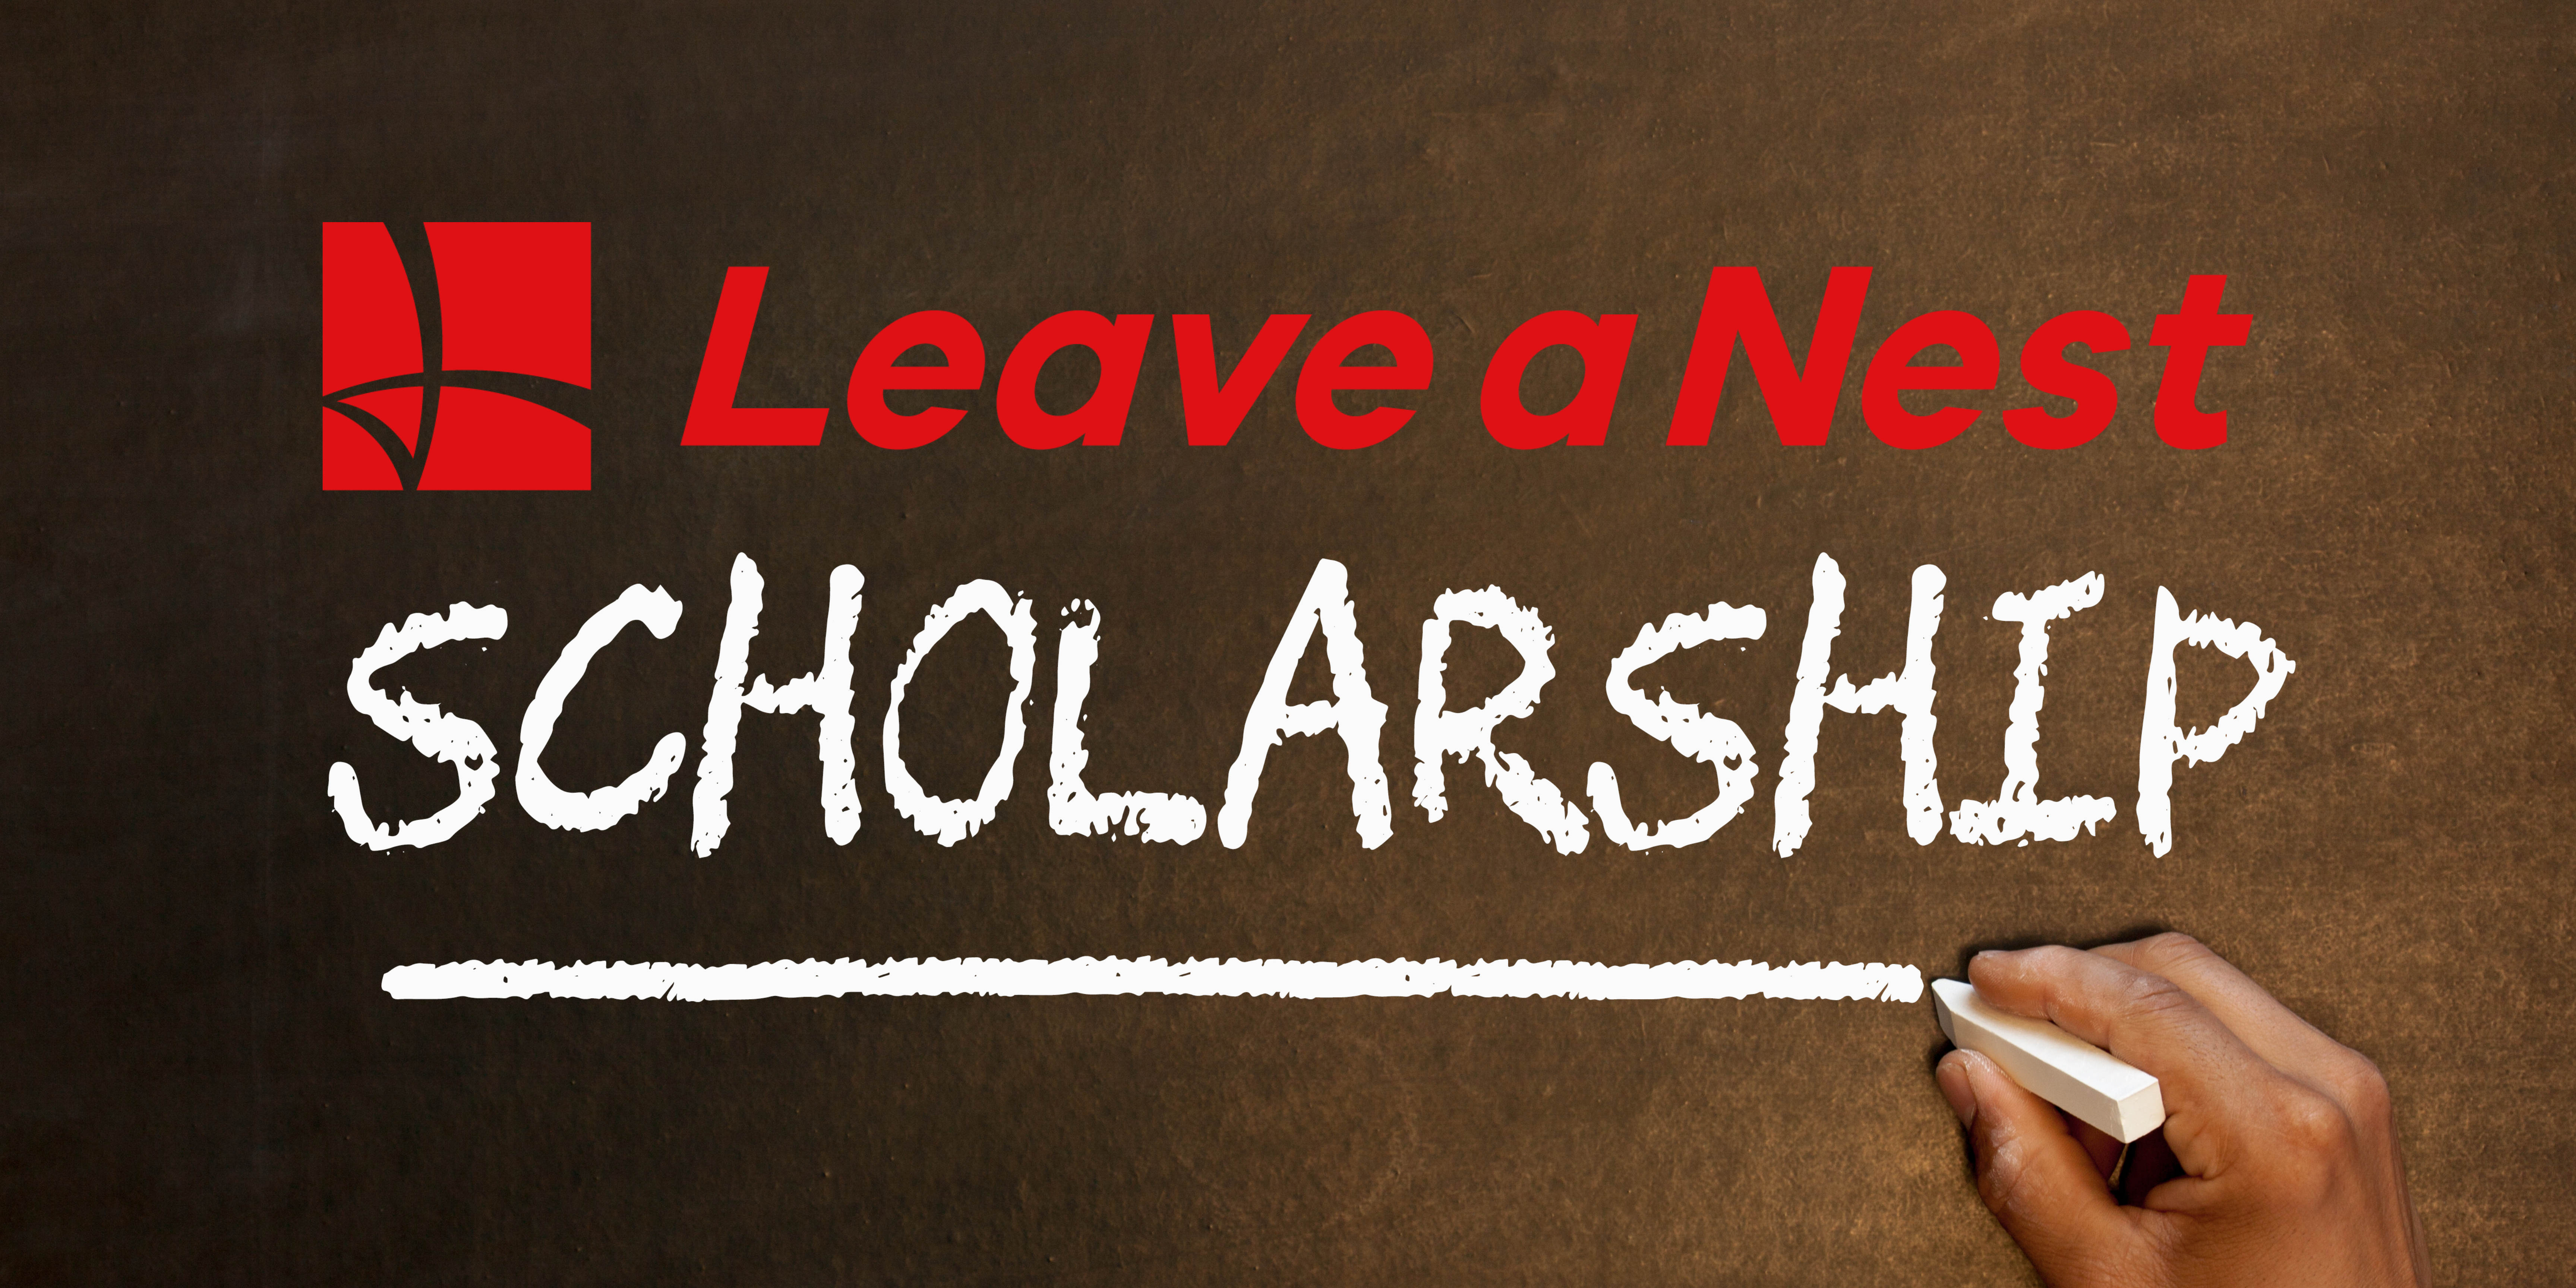 Leave a Nest Malaysia Scholarship